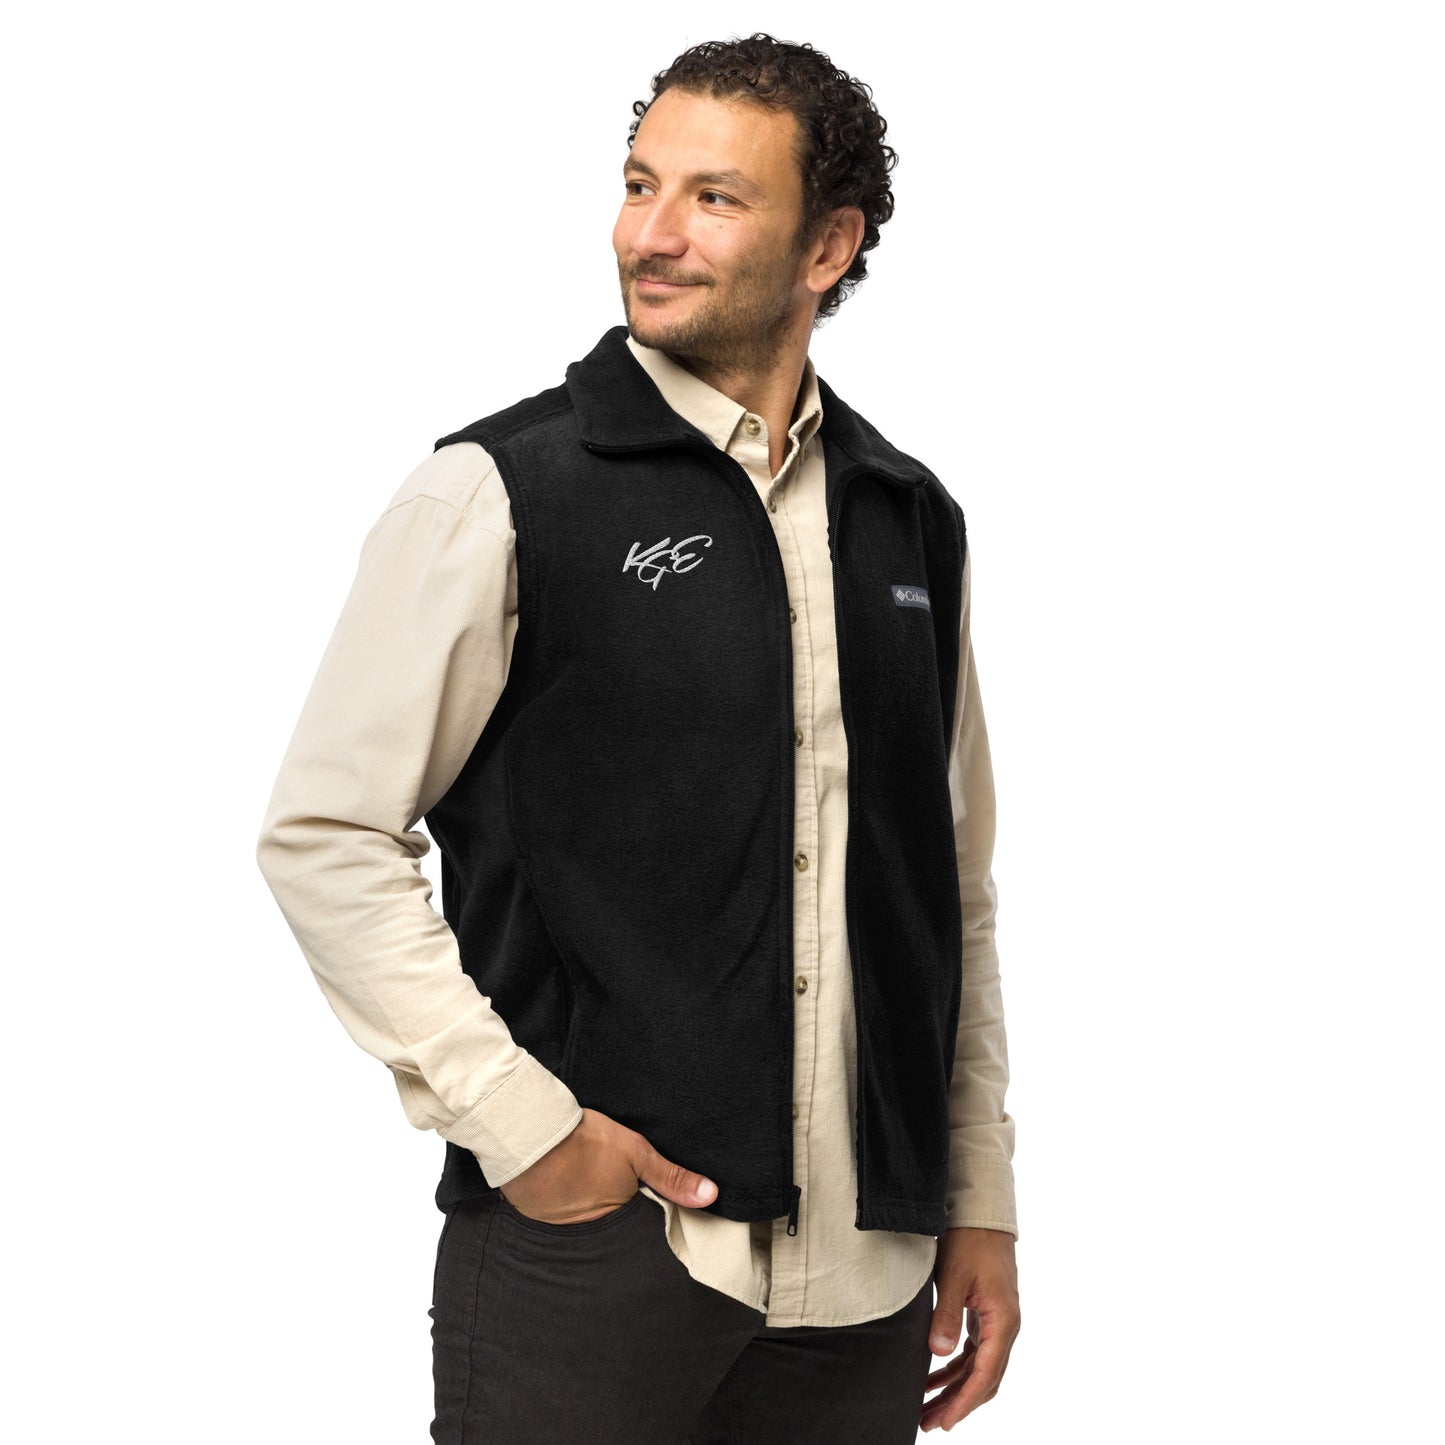 (New) KGE Unlid Men’s Columbia fleece vest Sizes (Sizes S-3XL)